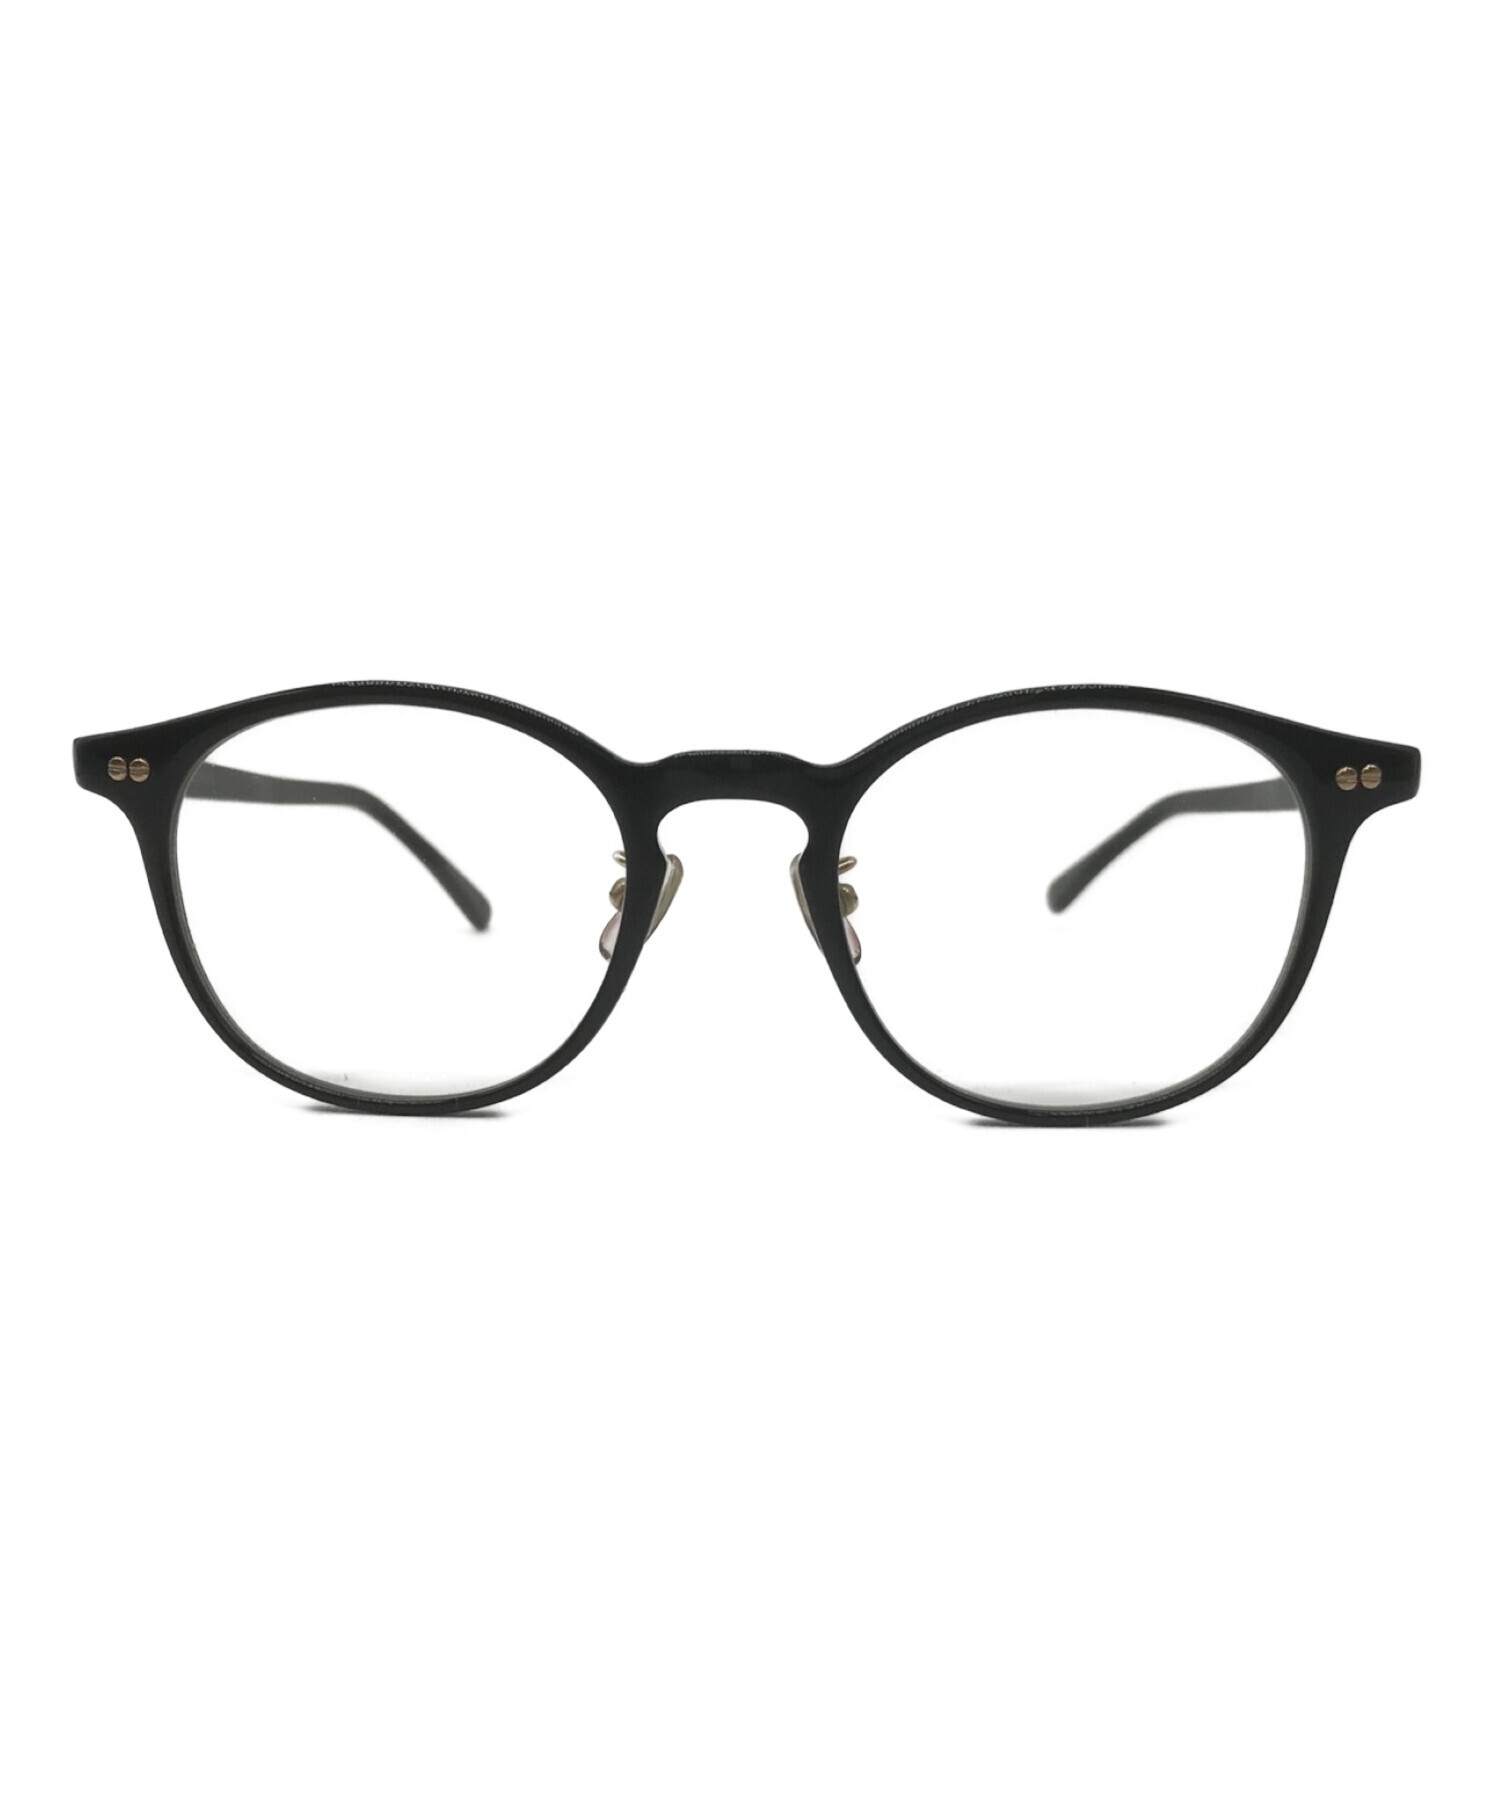 KANEKO OPTICAL×URBAN RESEARCH (金子眼鏡×アーバンリサーチ) 眼鏡 ブラック